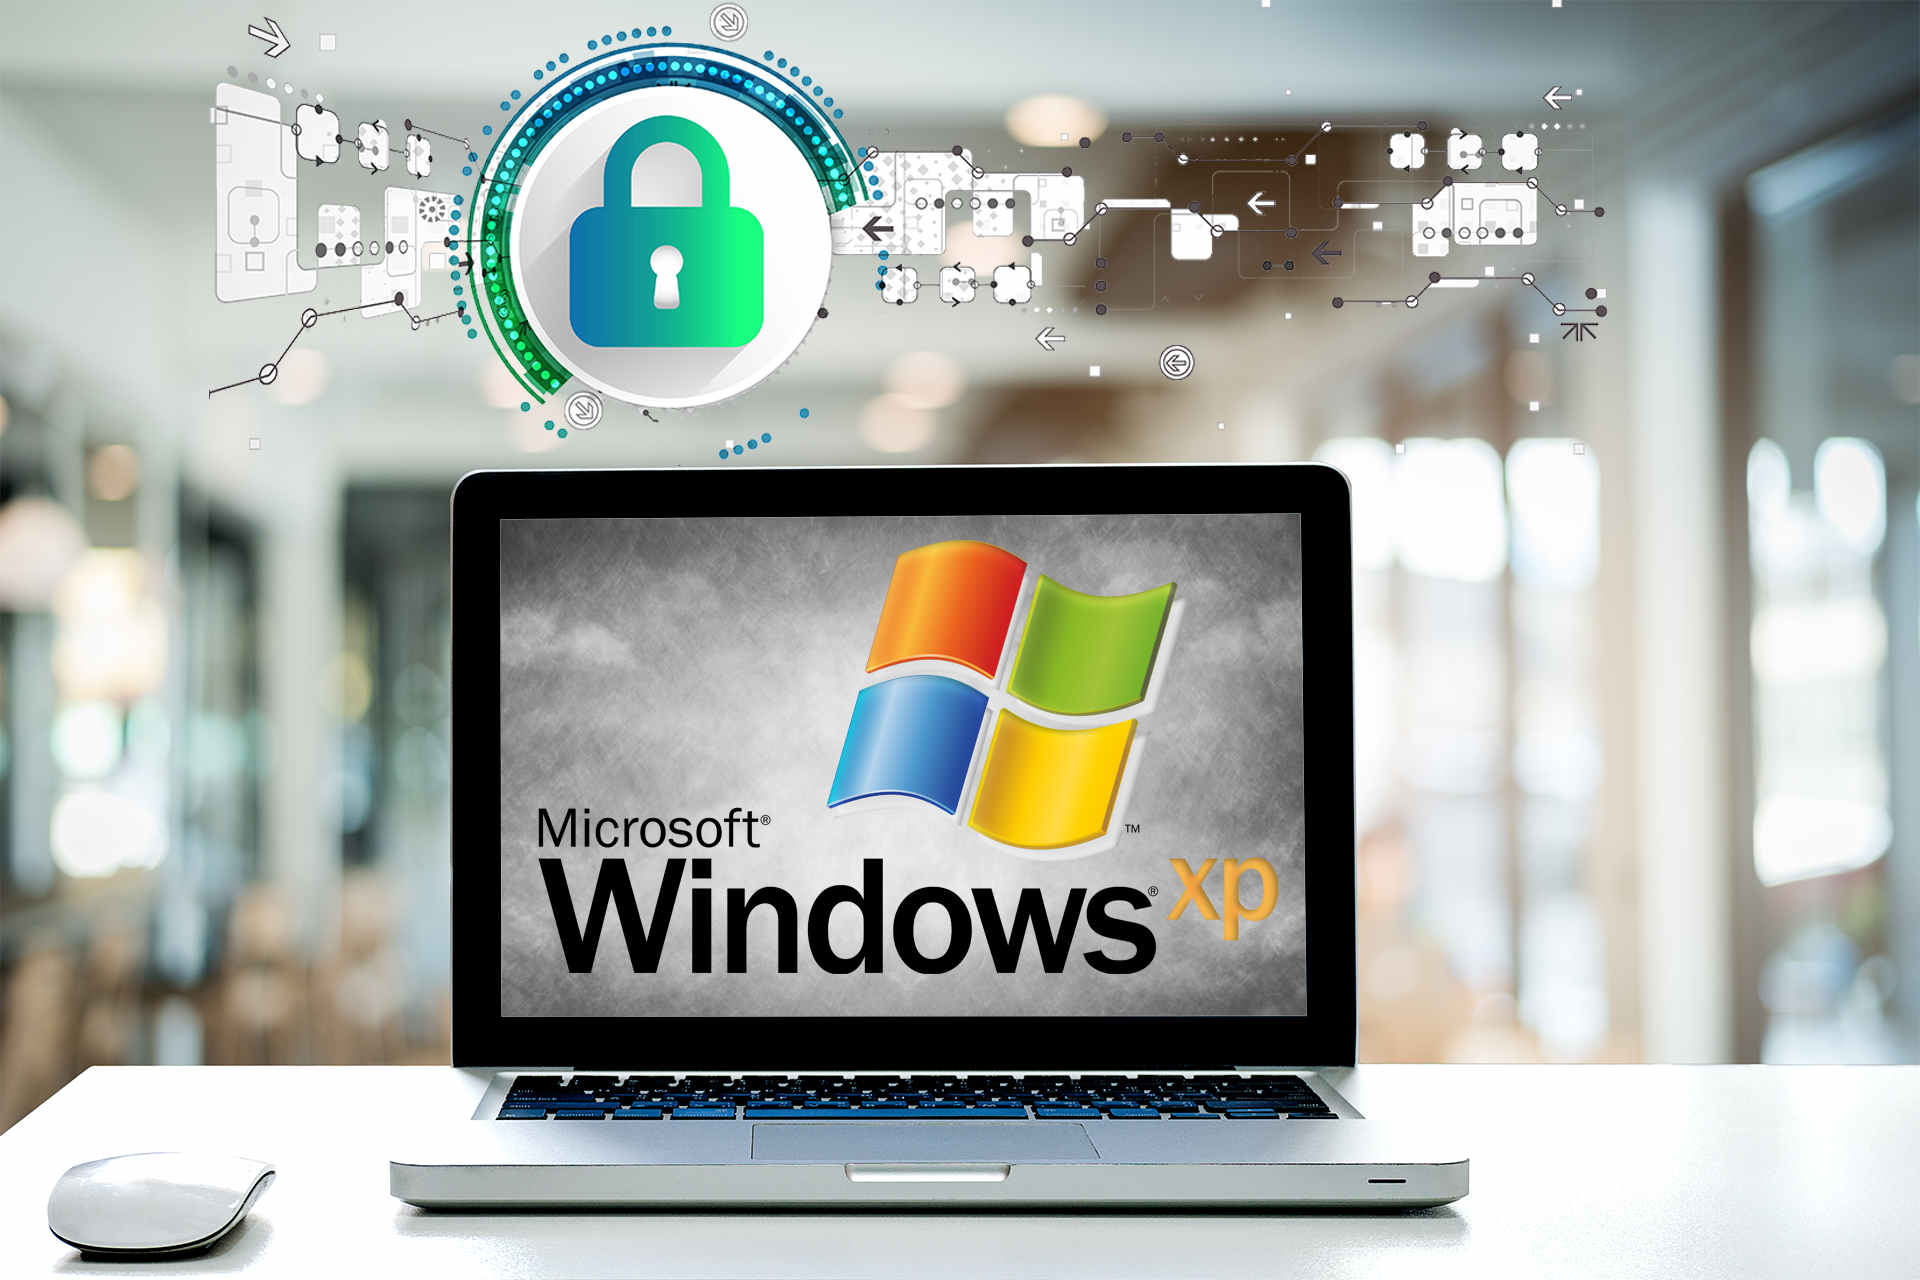 antivirus da microsoft para windows xp gratis